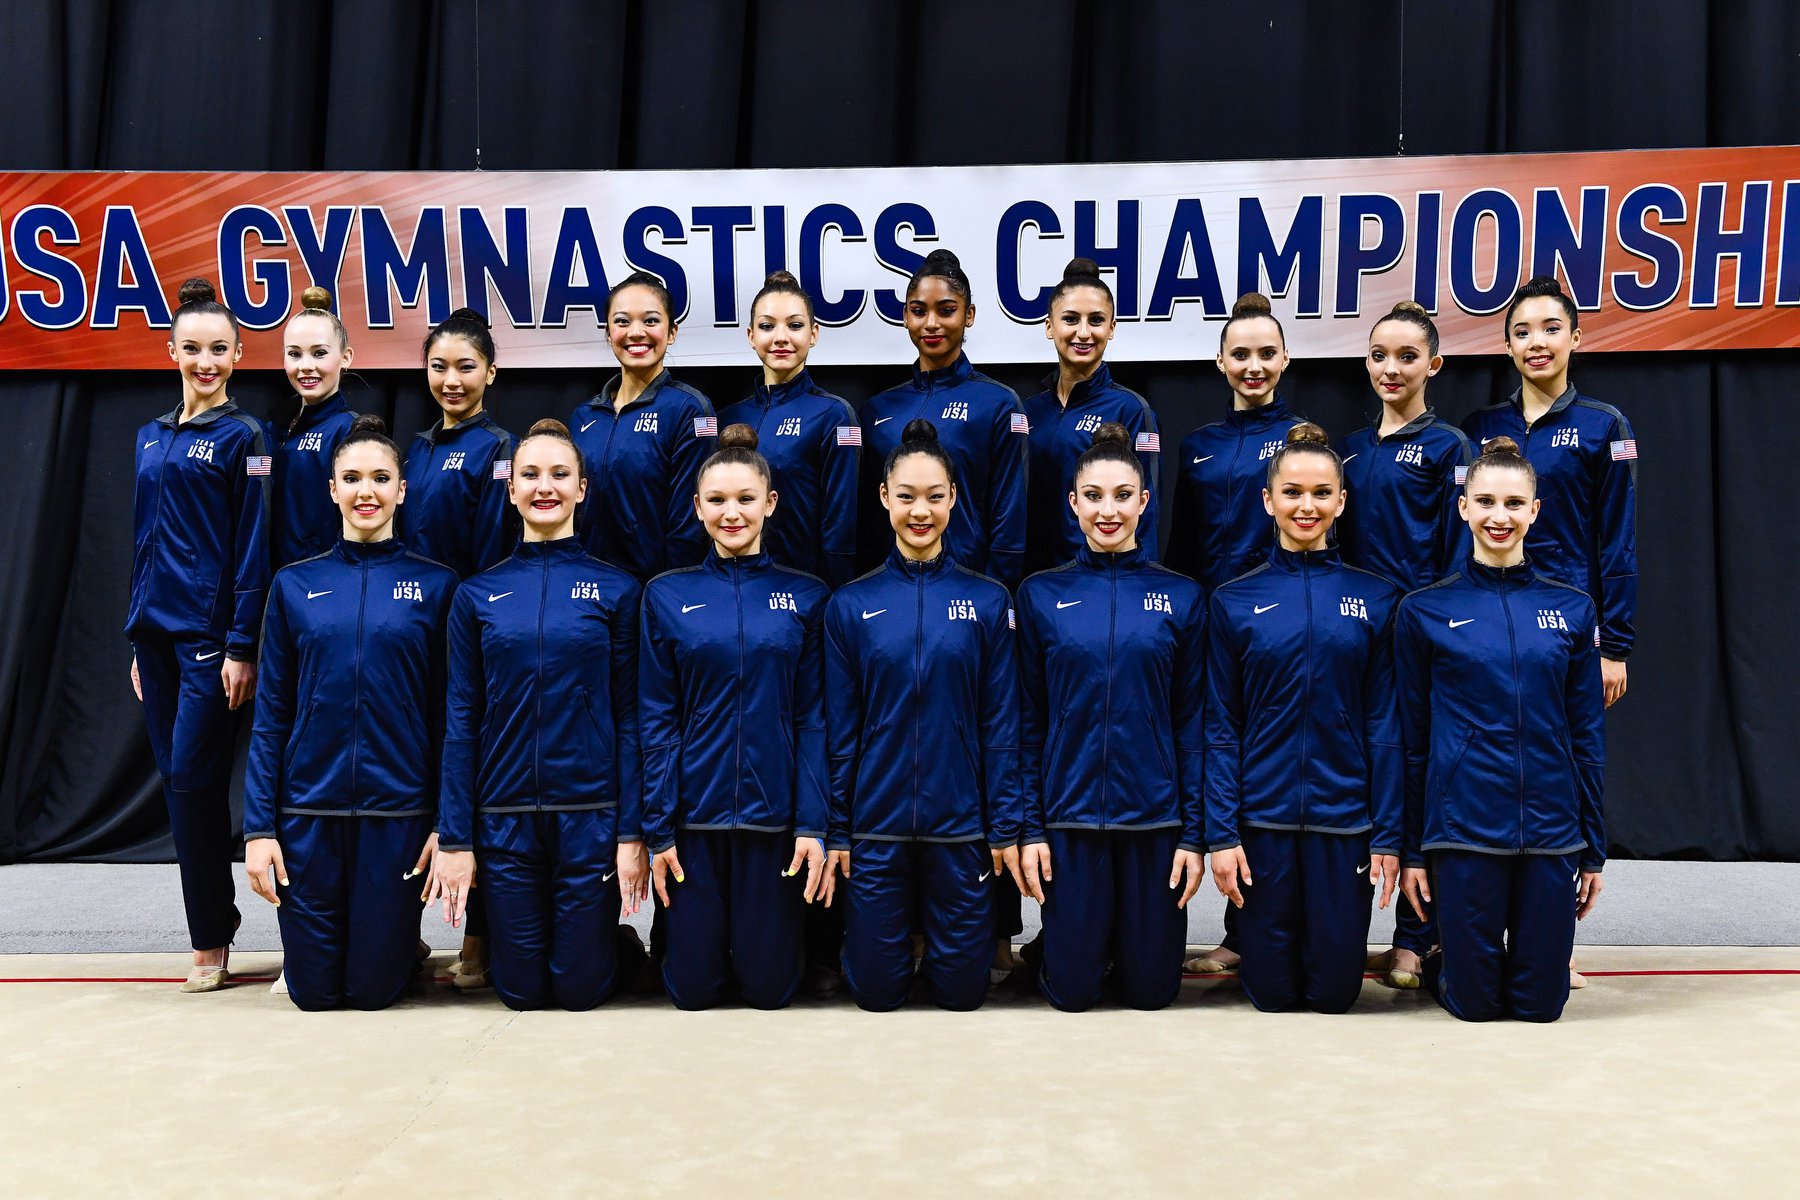 The new 2019-2020 Senior National Team at the USA Gymnastics Championships. Elena Shinohara is third from the left on back row (Credit: USA Gymnastics)